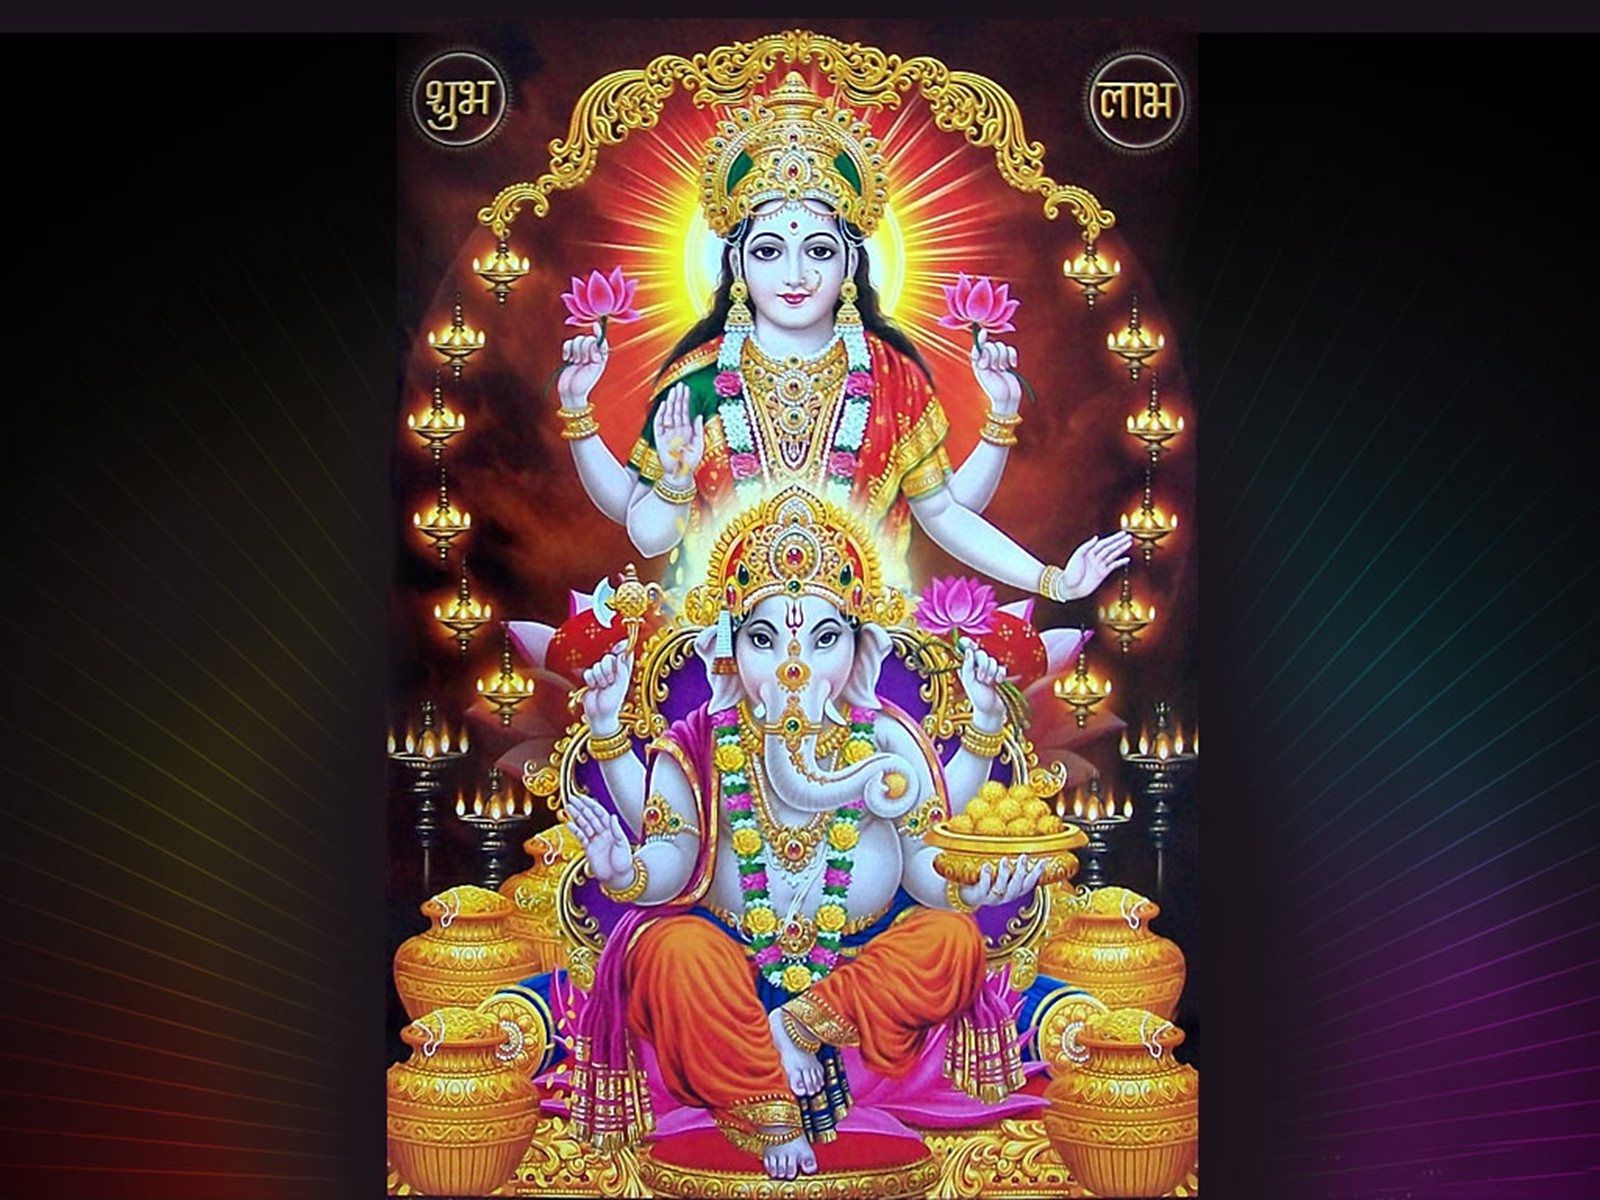 Download Free HD Wallpaper of Maa laxmi(lakshmi) Devi. Maa Laxmi Wallpaper Download. Maa Laxmi Photo Download